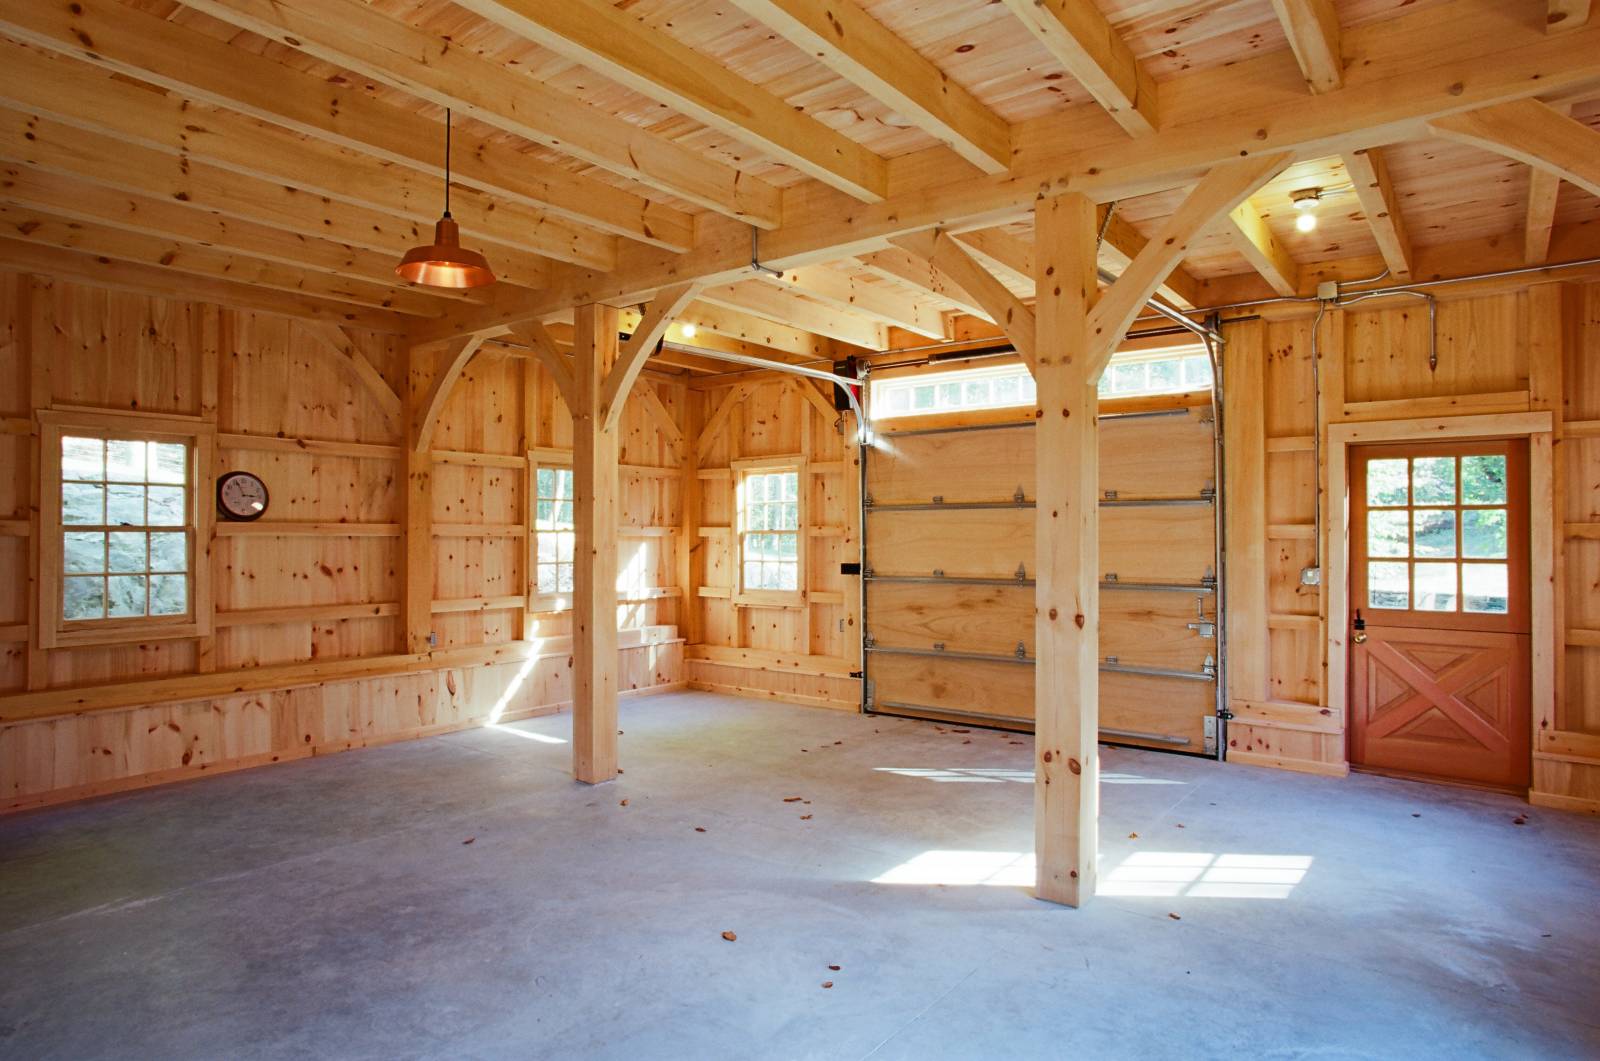 Downstairs in post & beam bank barn • pendant barn light • post & beam construction • authentic joinery • Dutch door • overhead door with wood panels